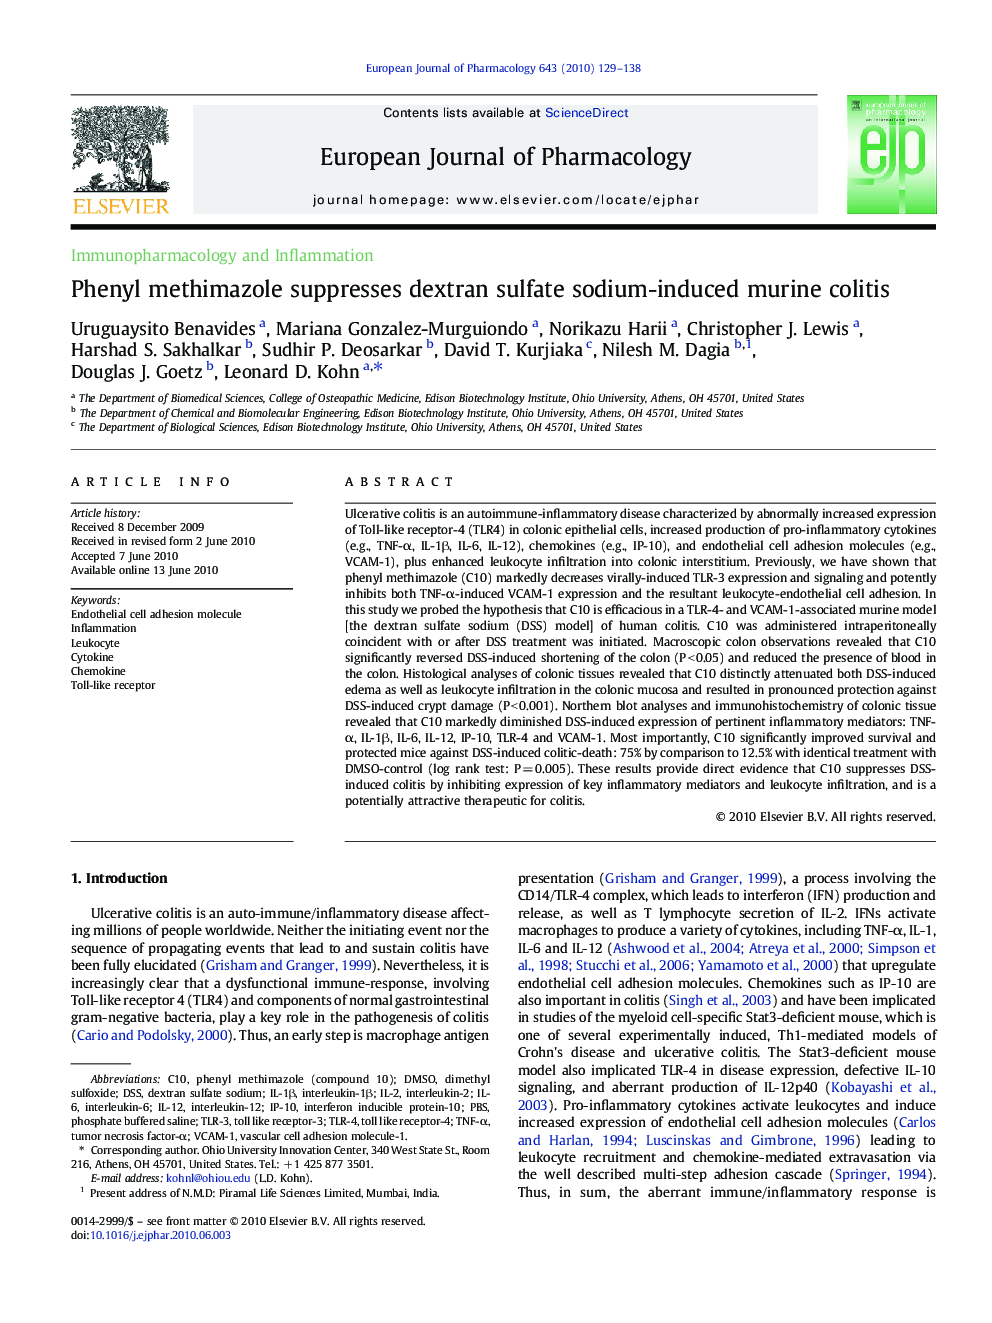 Phenyl methimazole suppresses dextran sulfate sodium-induced murine colitis